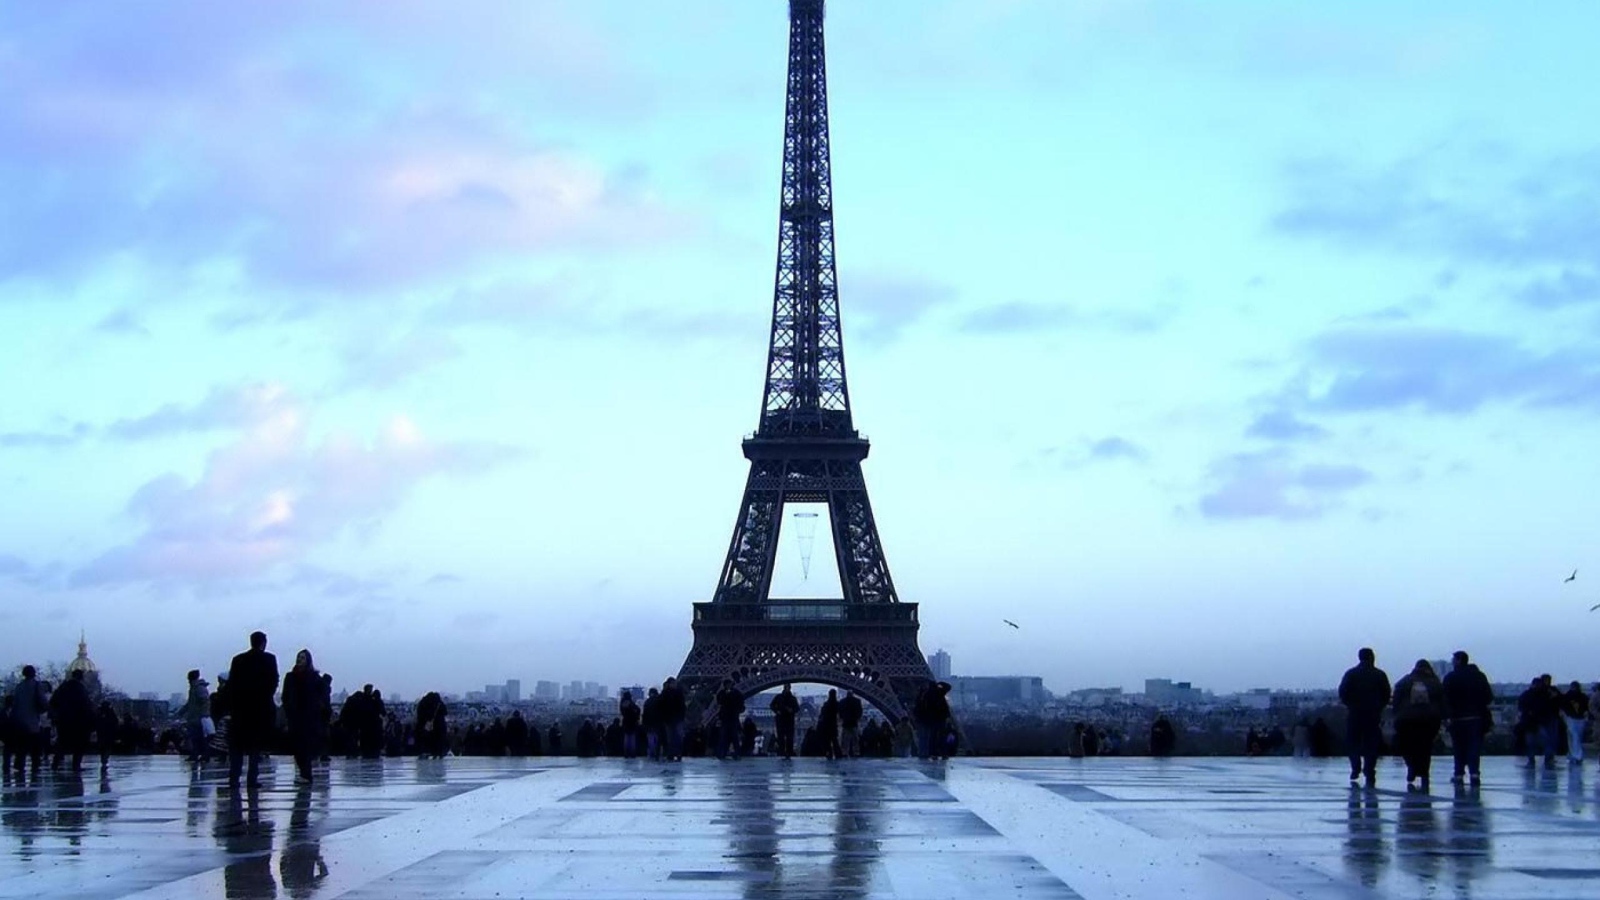 Эйфелева башня после дождя